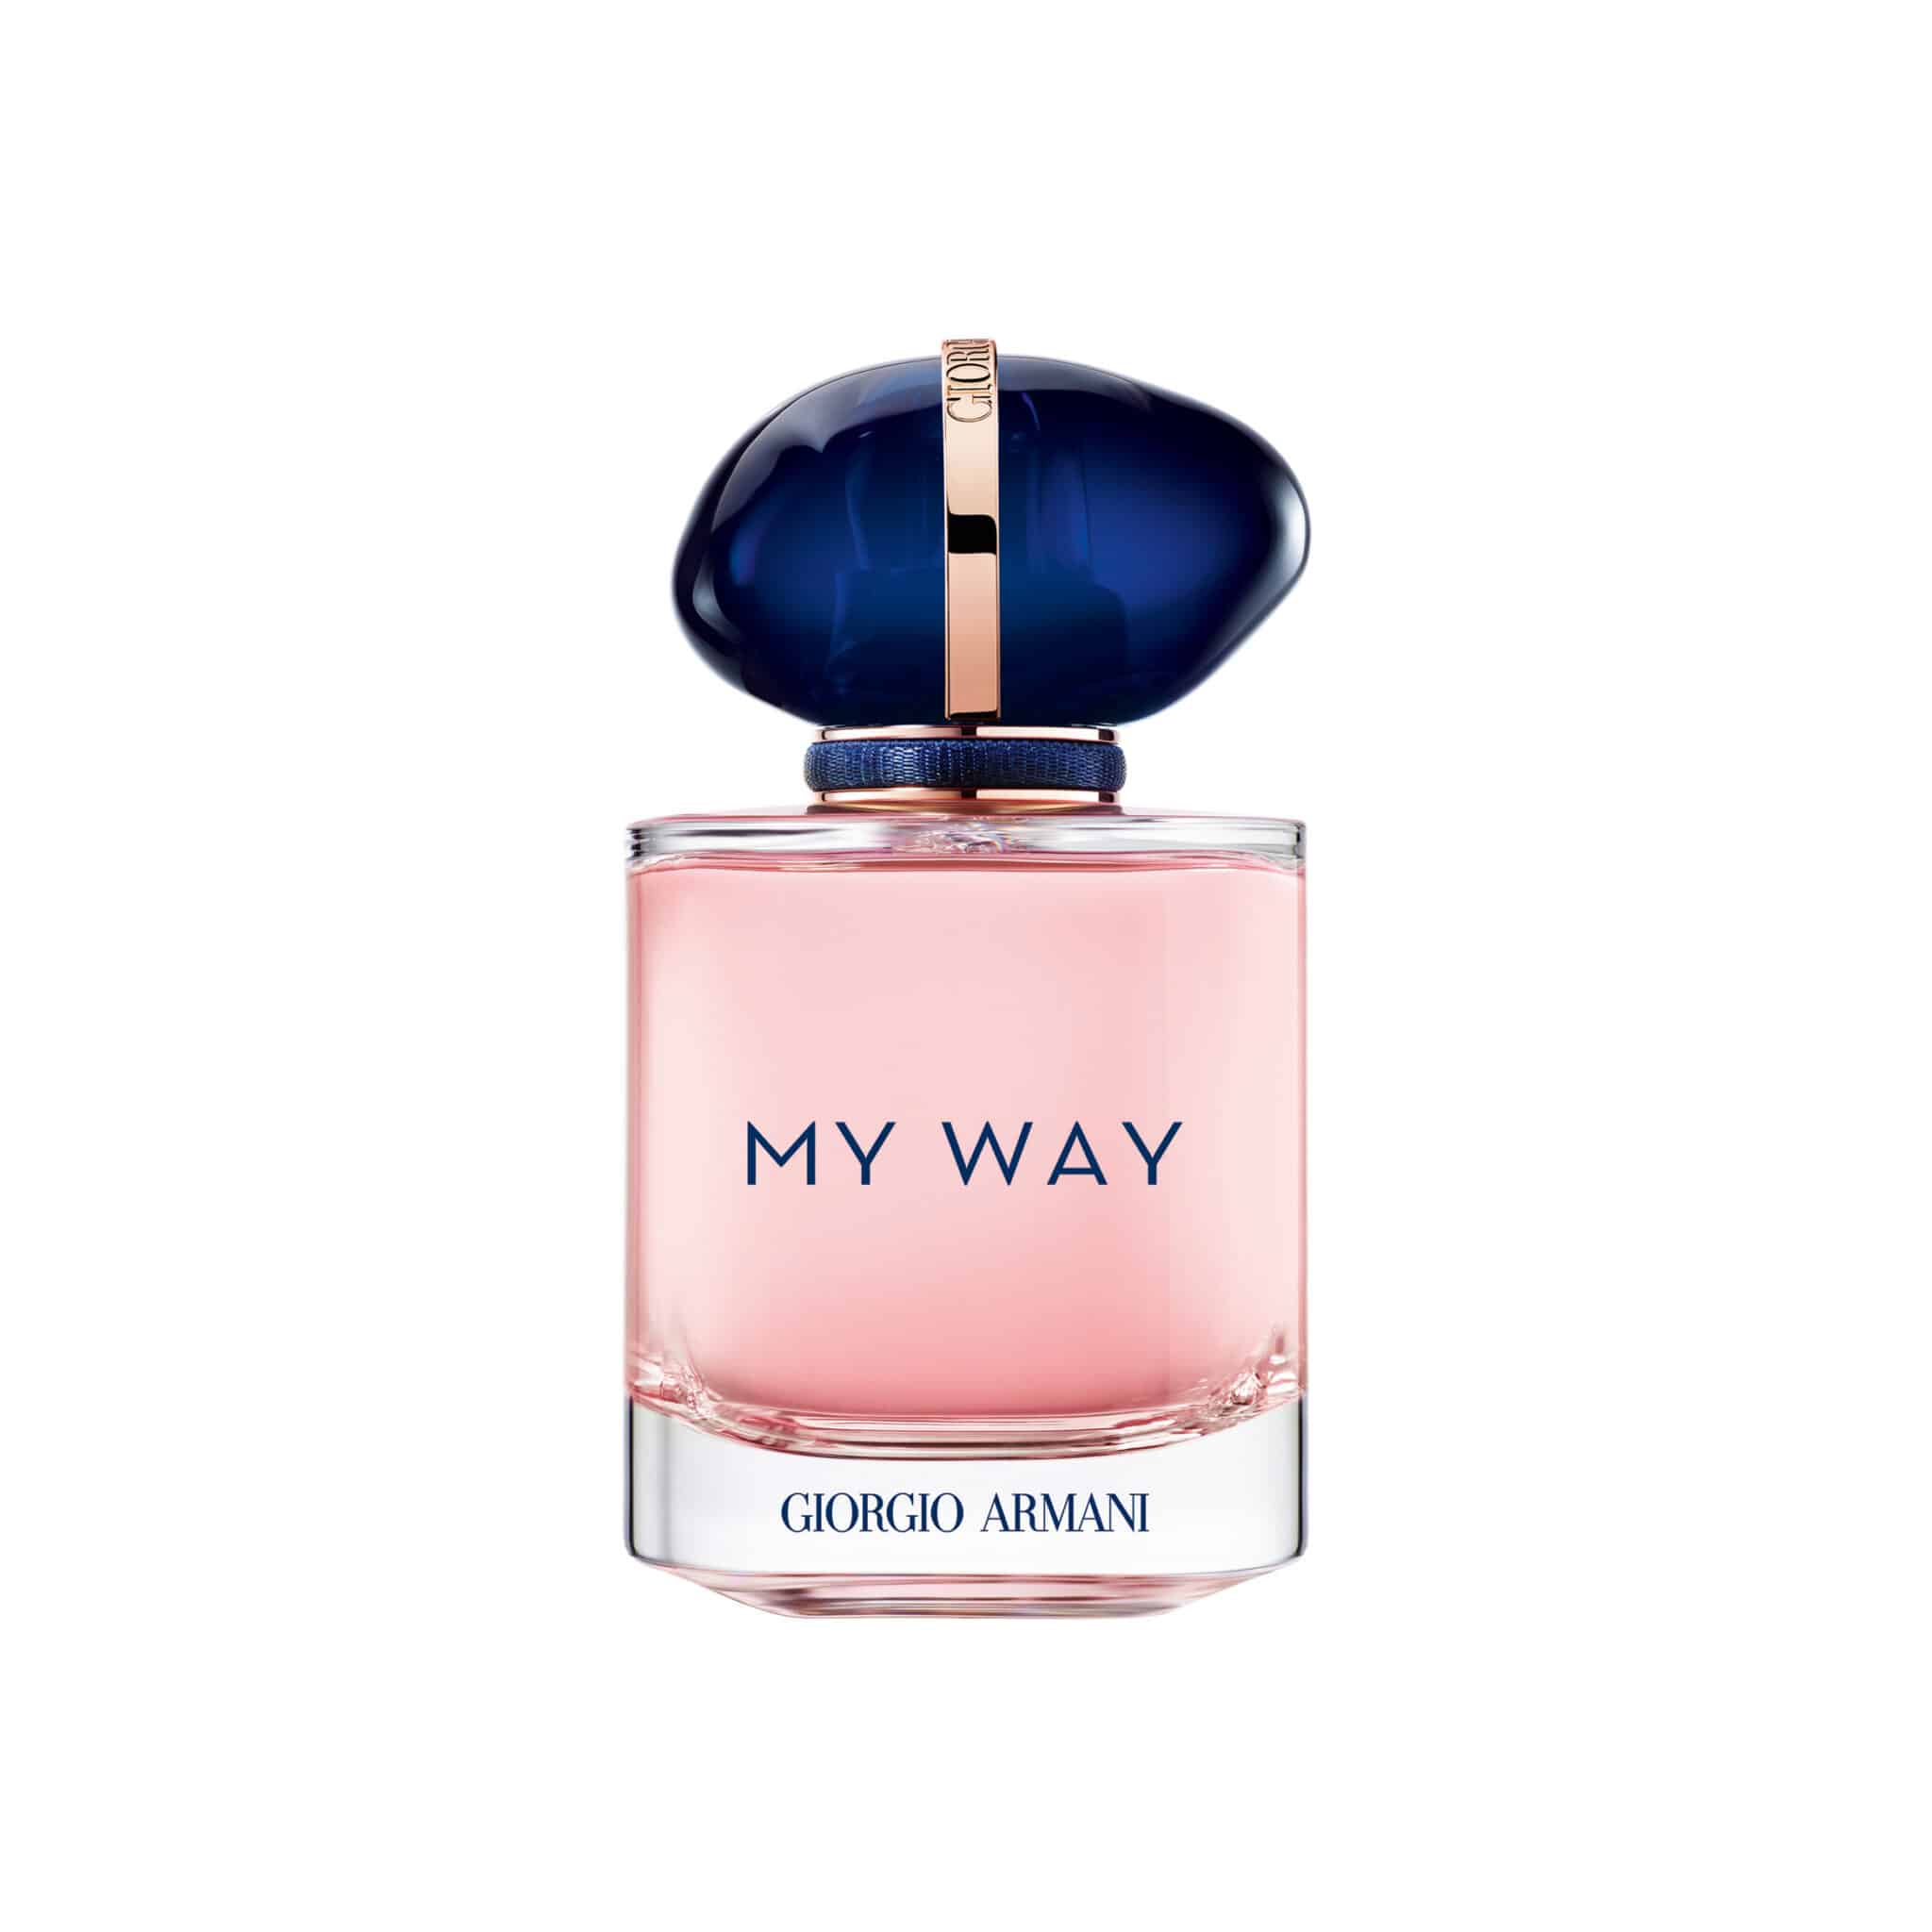 My Way Eau de parfum - Giorgio Armani